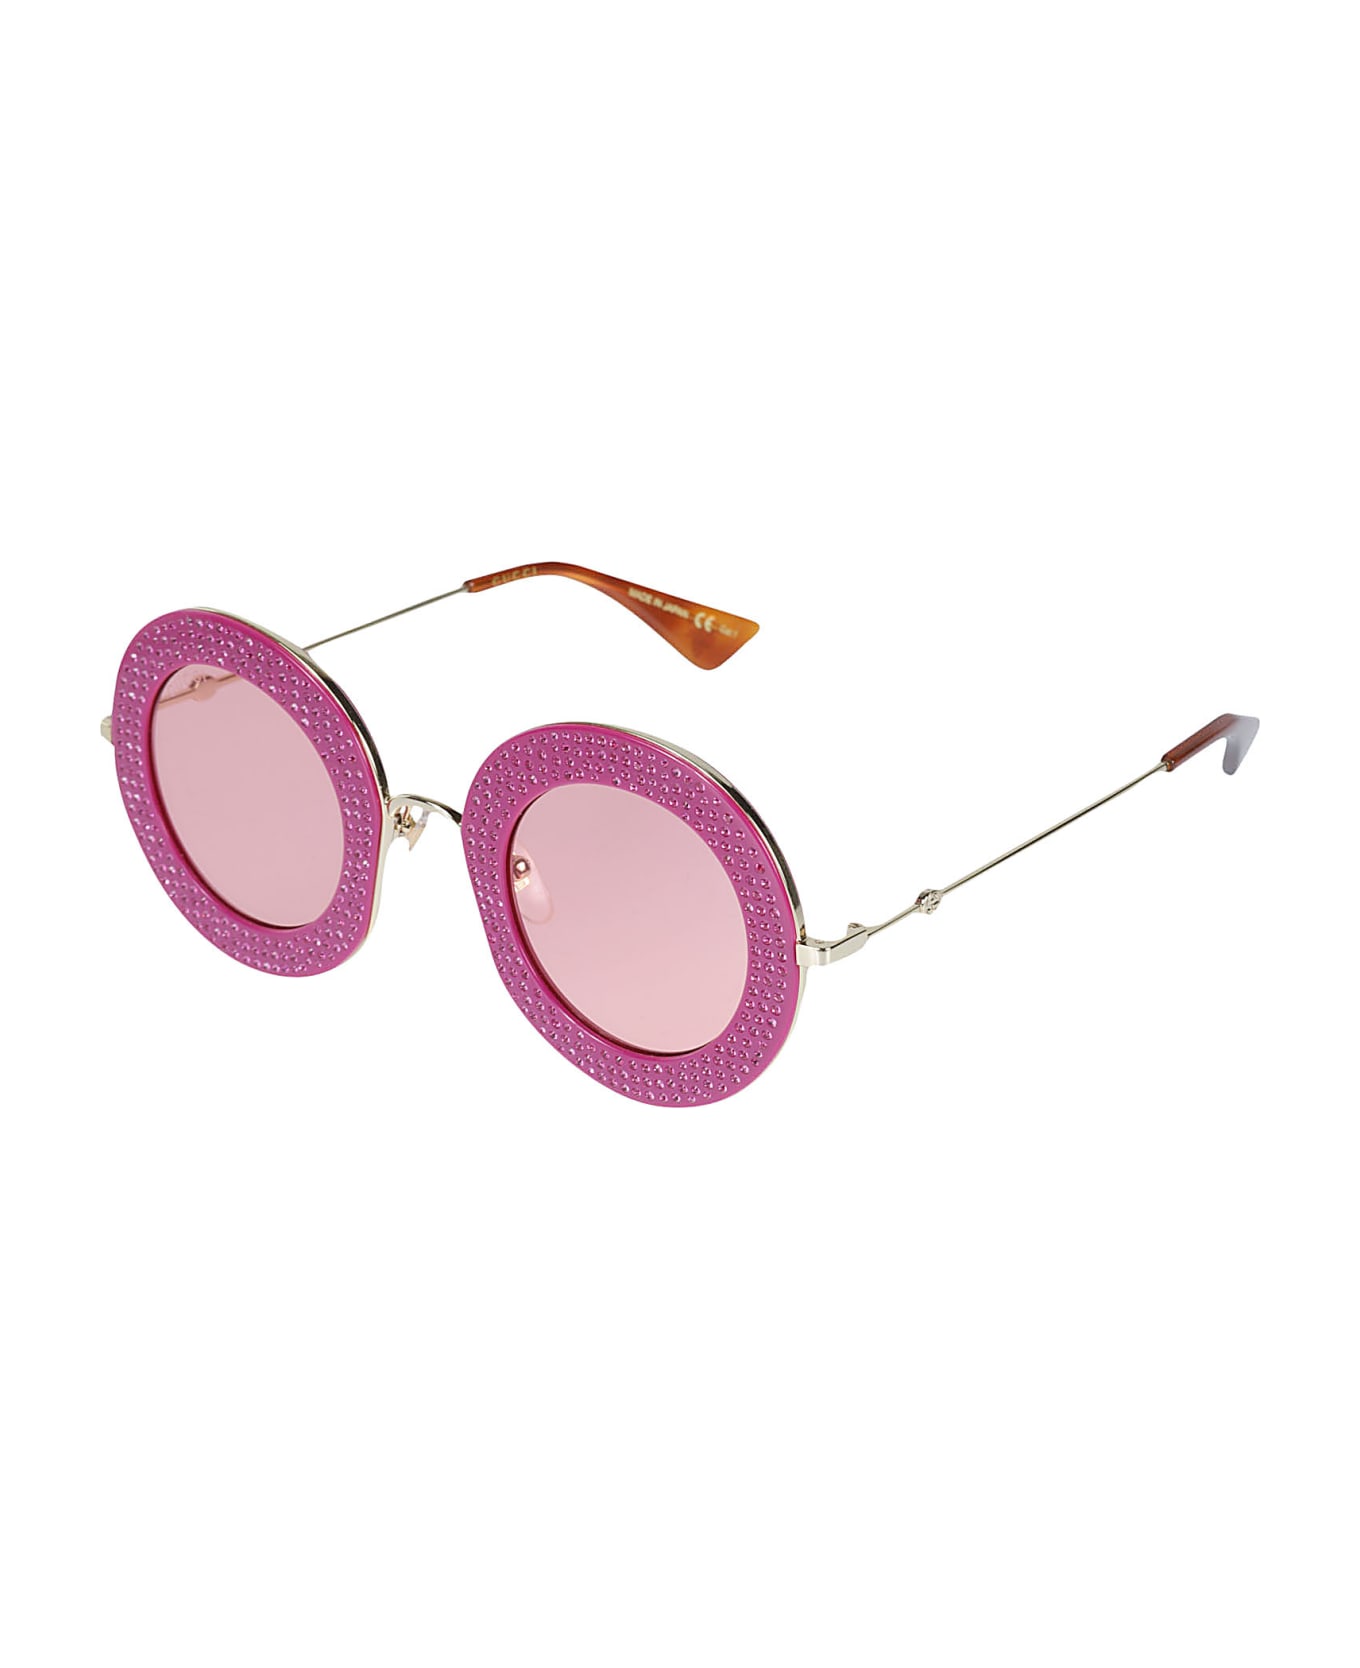 Gucci Eyewear Embellished Round Sunglasses - 012 fuchsia gold pink